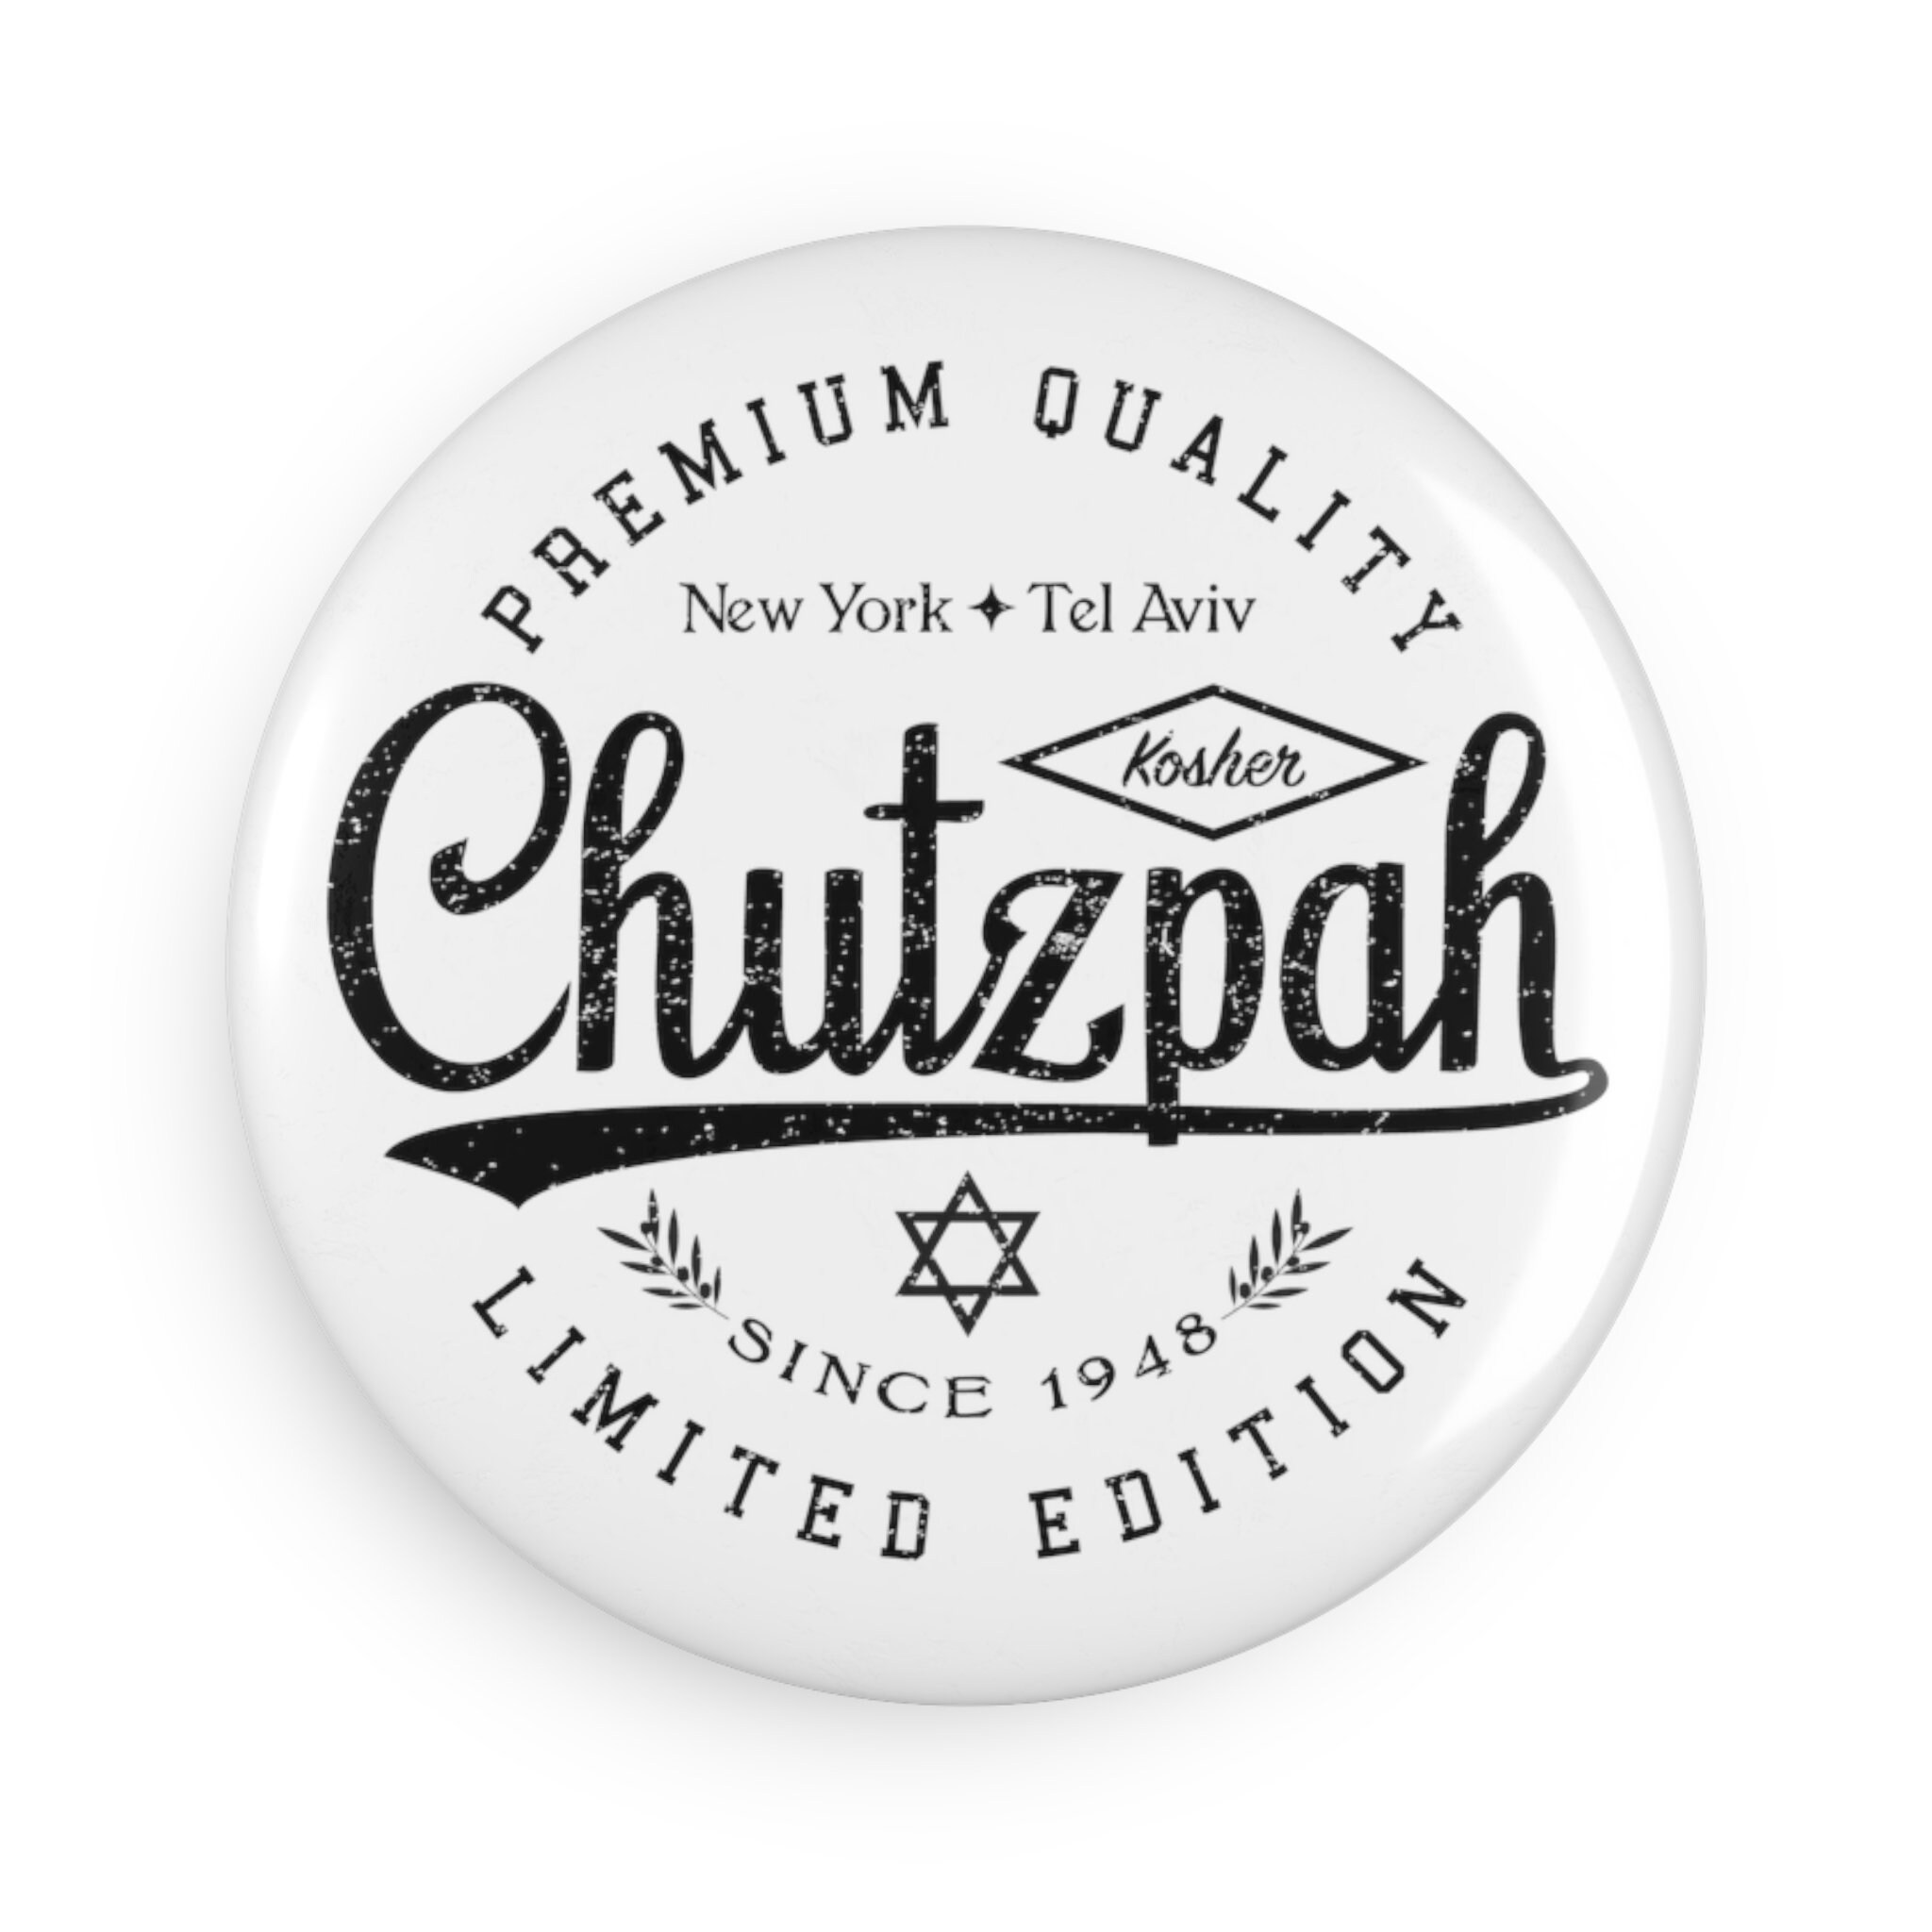 Chutzpah! - Chutzpah - Magnet